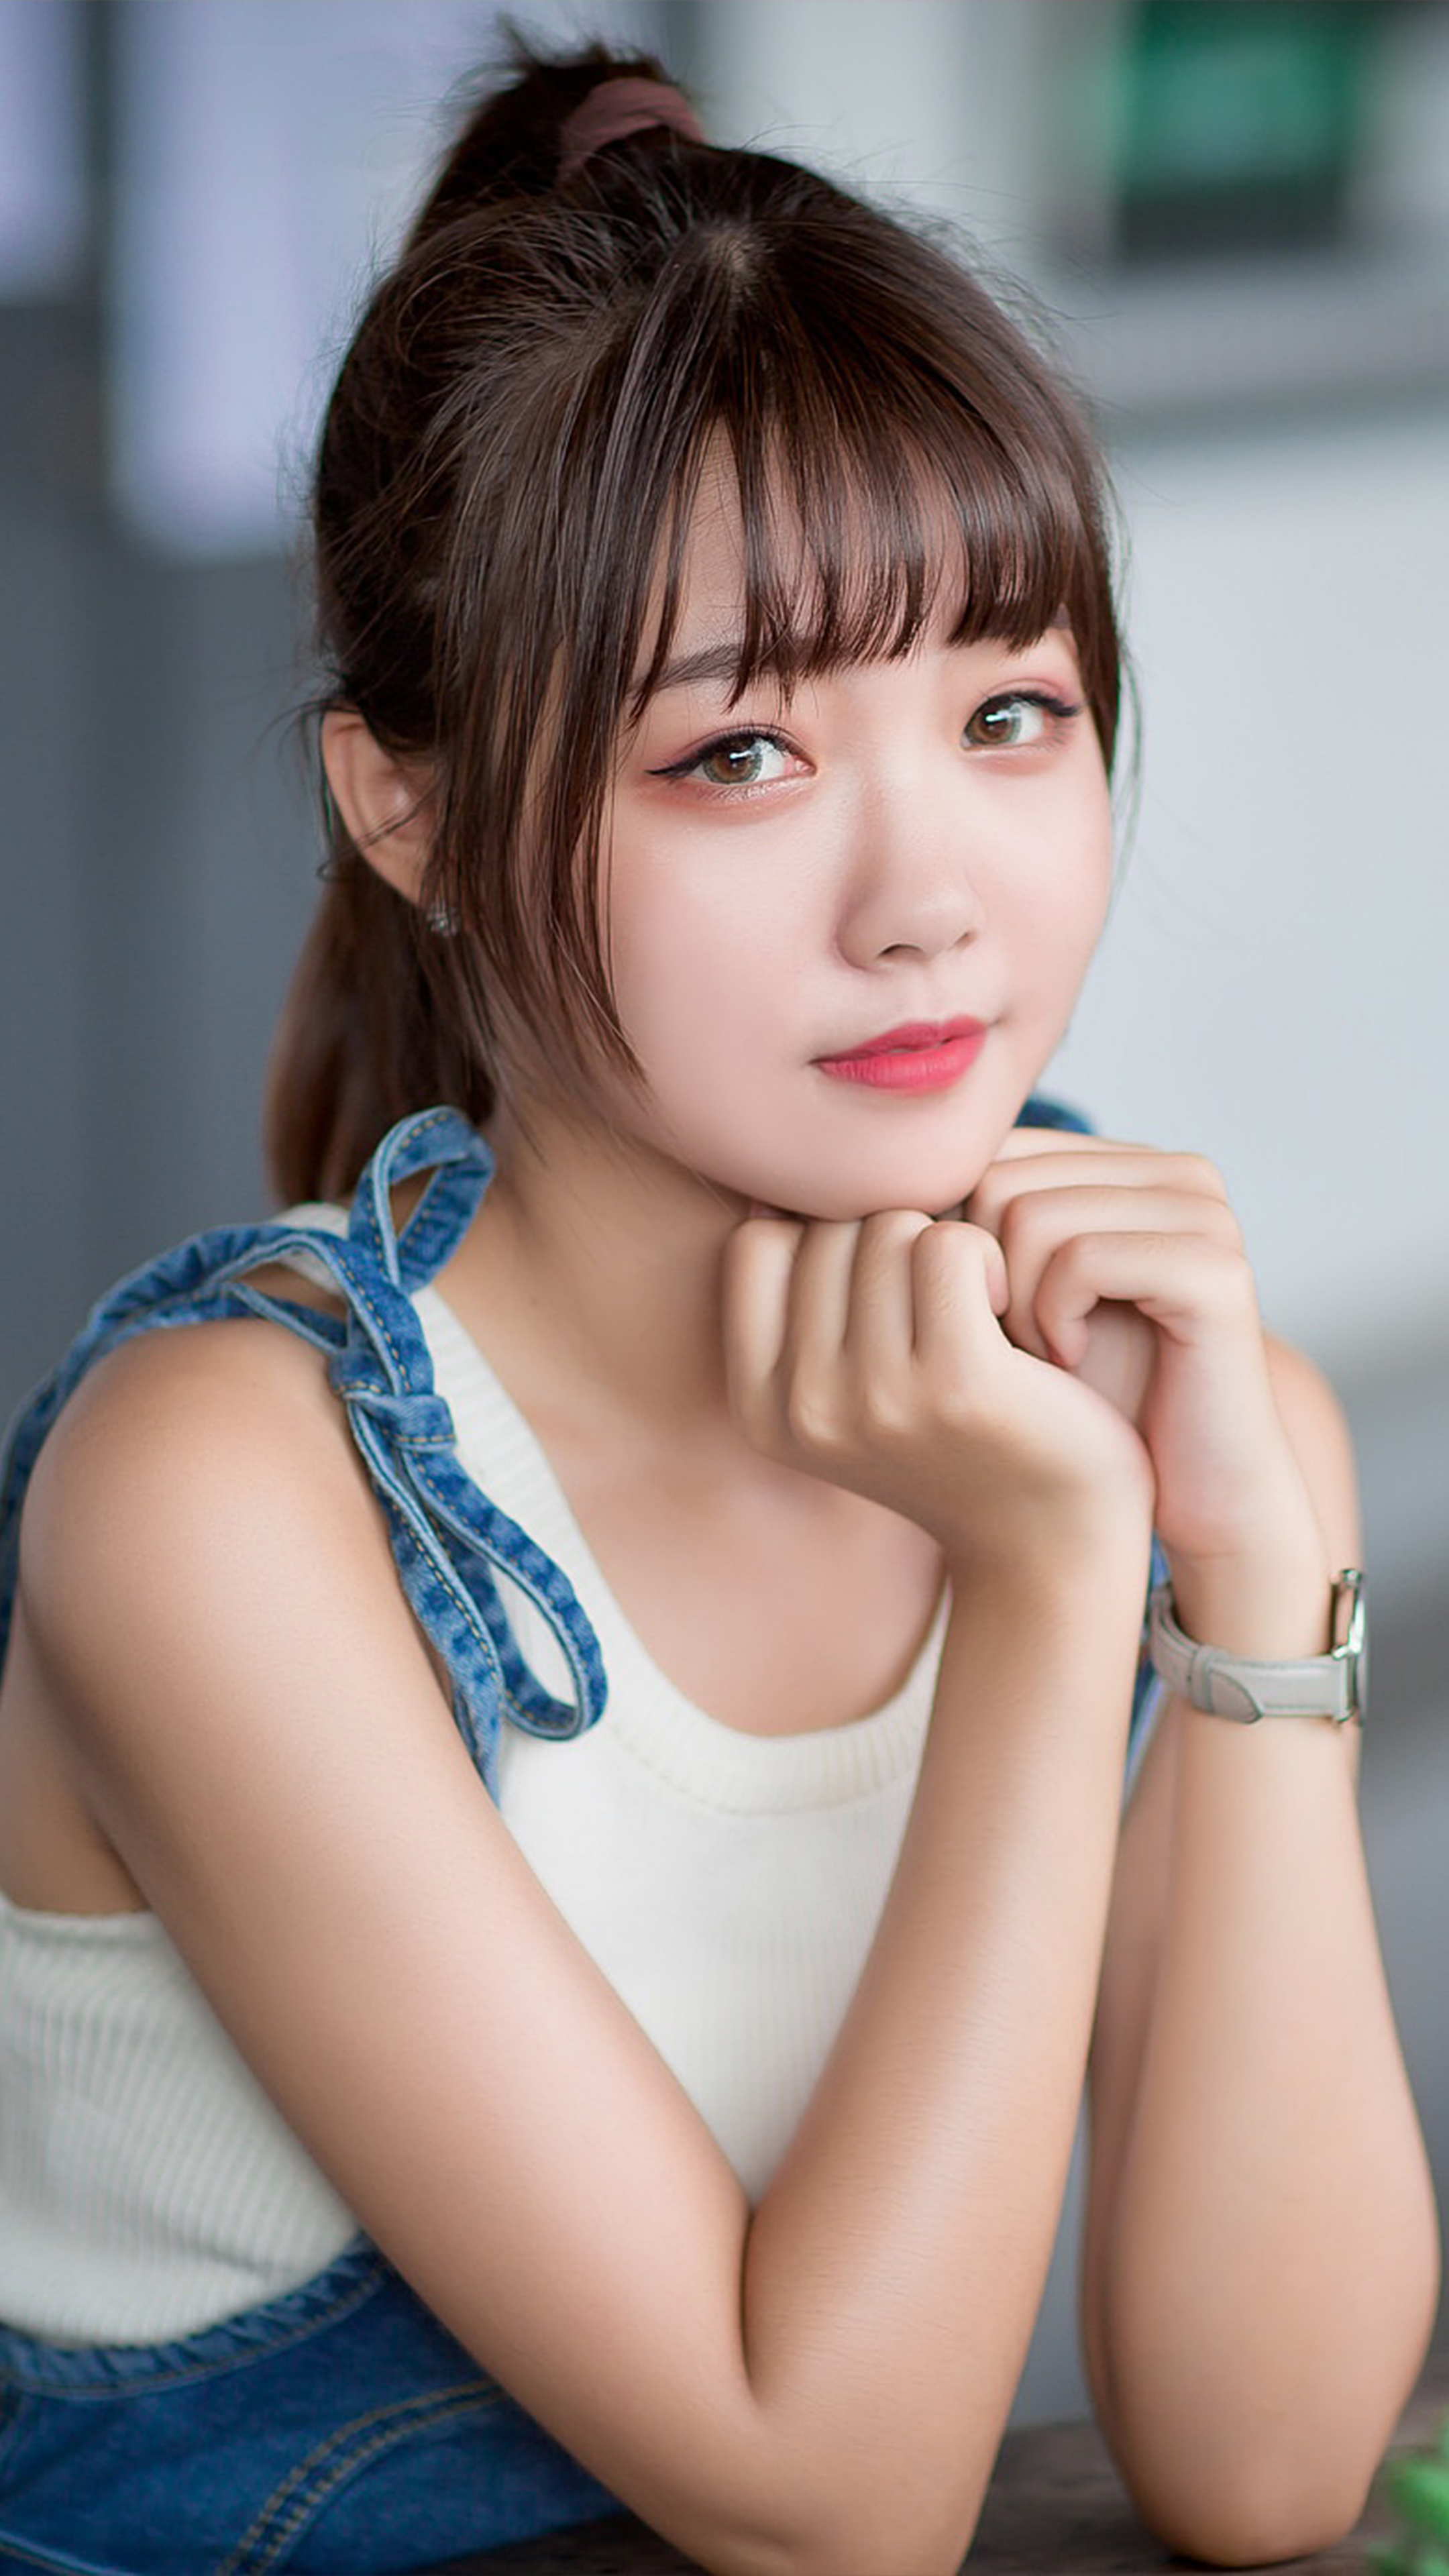 Cute Adorable Asian Girl Photography 4K Ultra HD Mobile ...